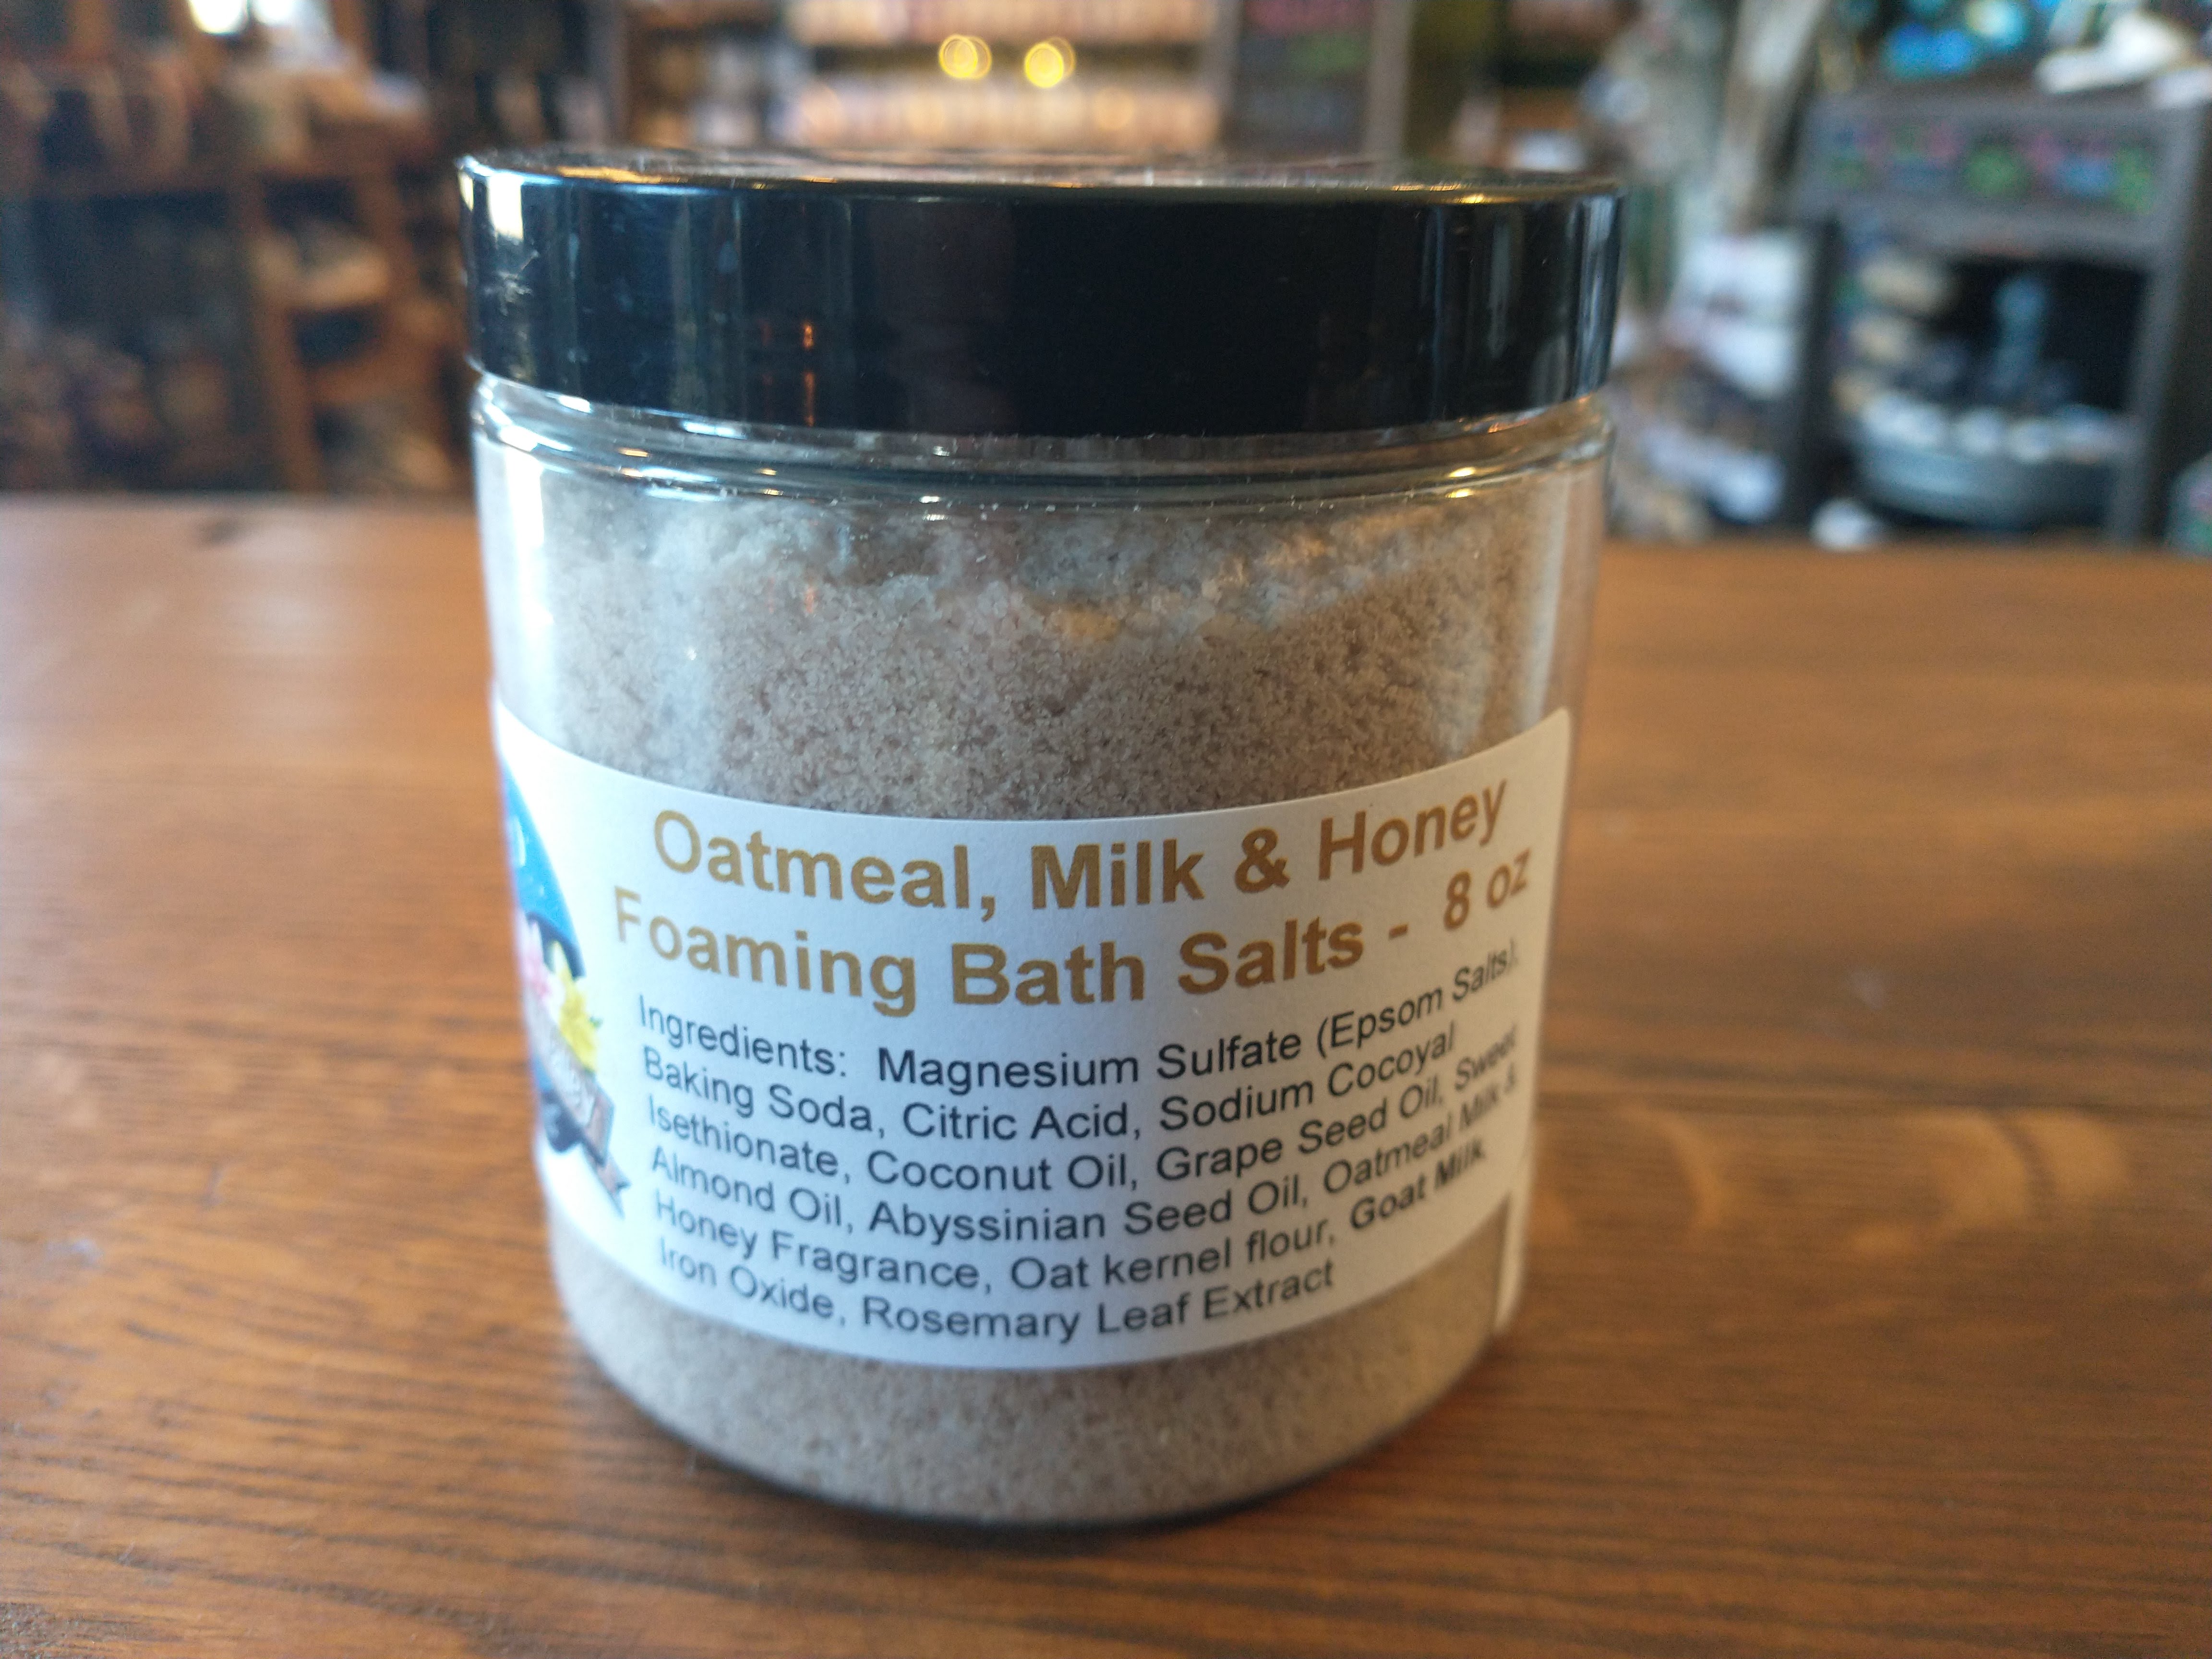 Oatmeal Milk & Honey Foaming Bath Salts (with Goat's Milk)